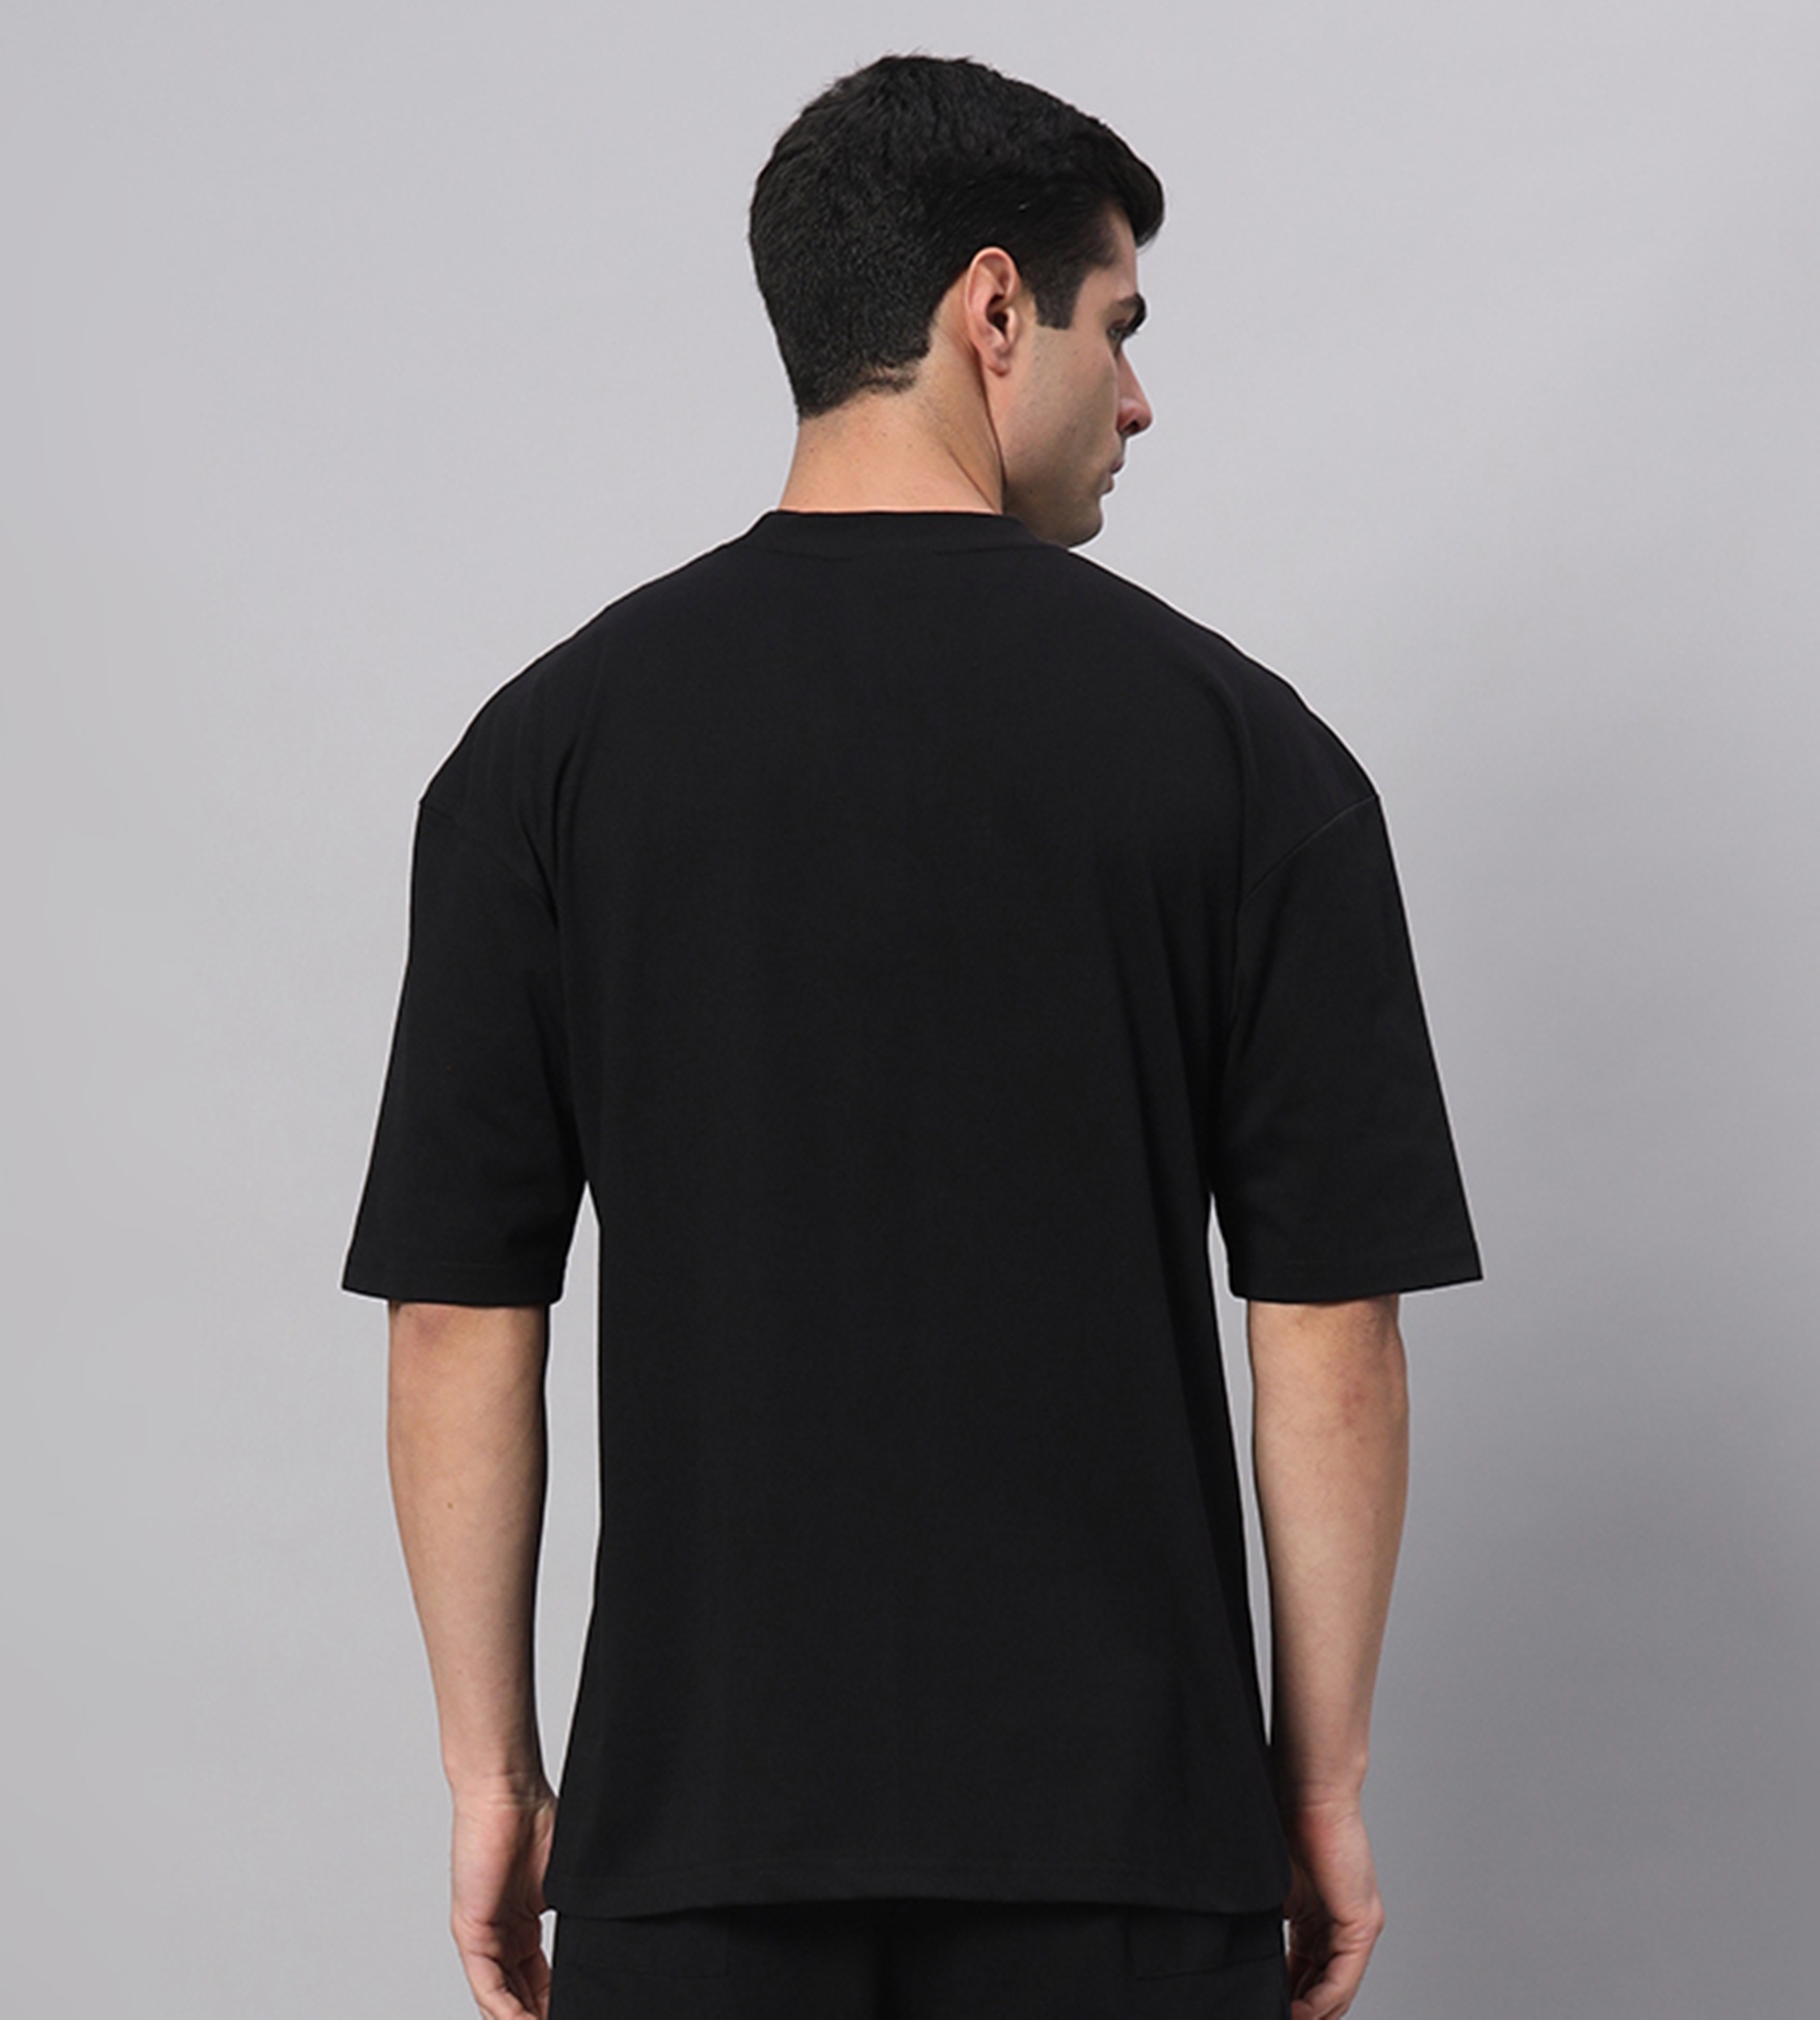 Men's Black Cotton Loose Printed   Activewear T-Shirts